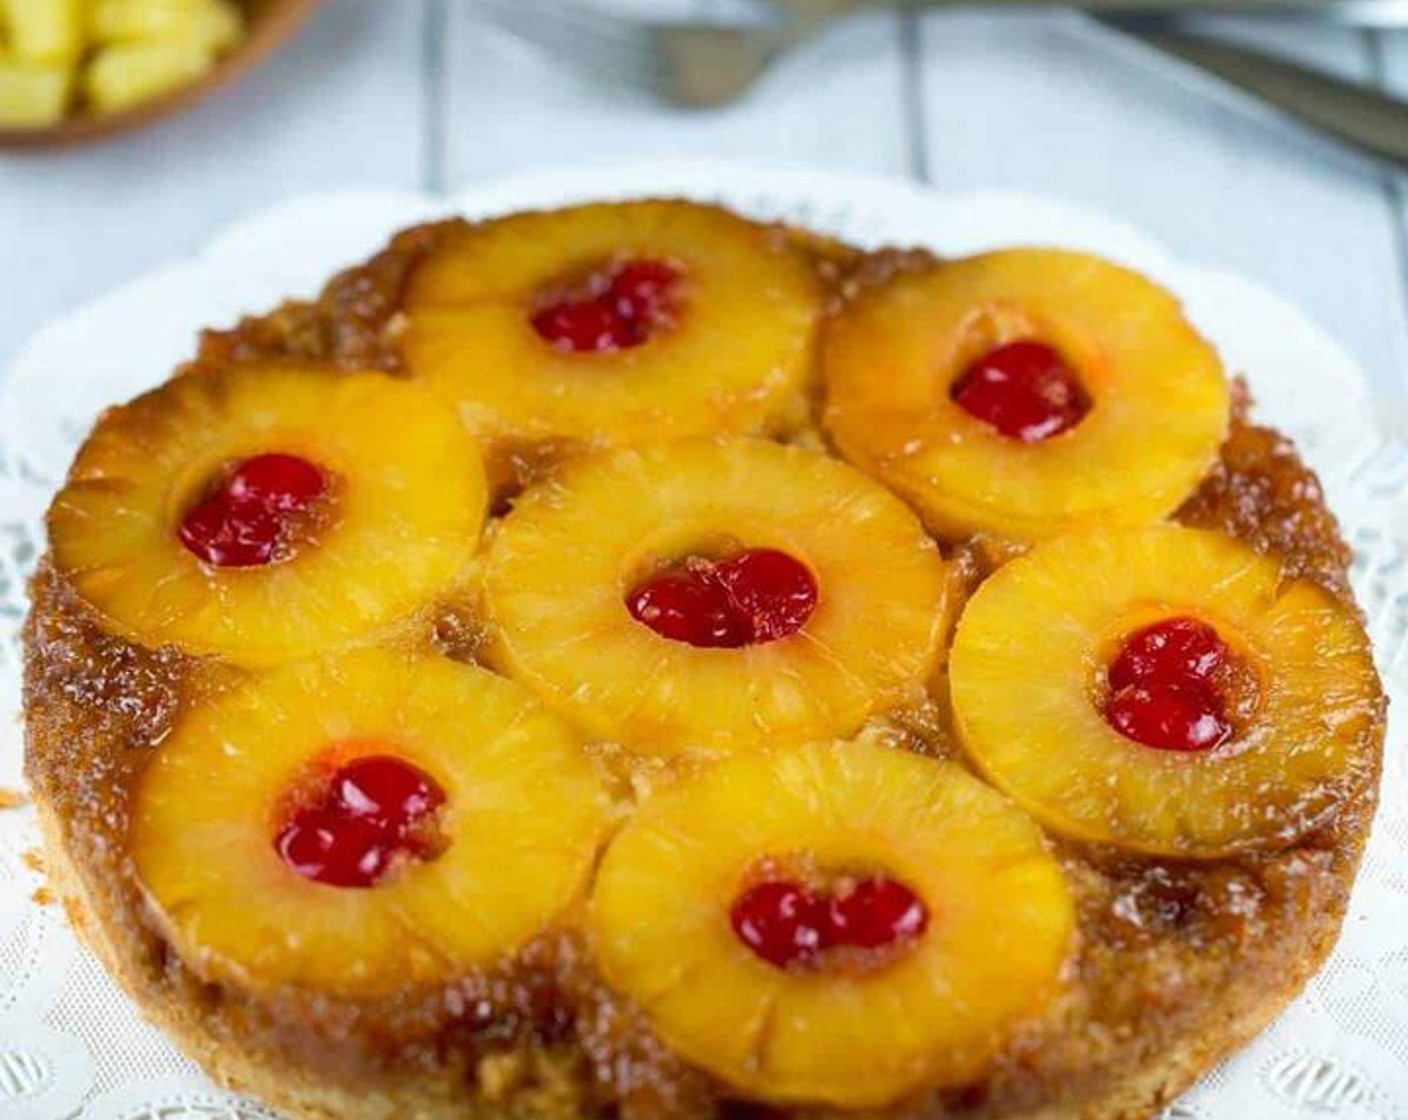 Classic Pineapple Upside-Down Cake